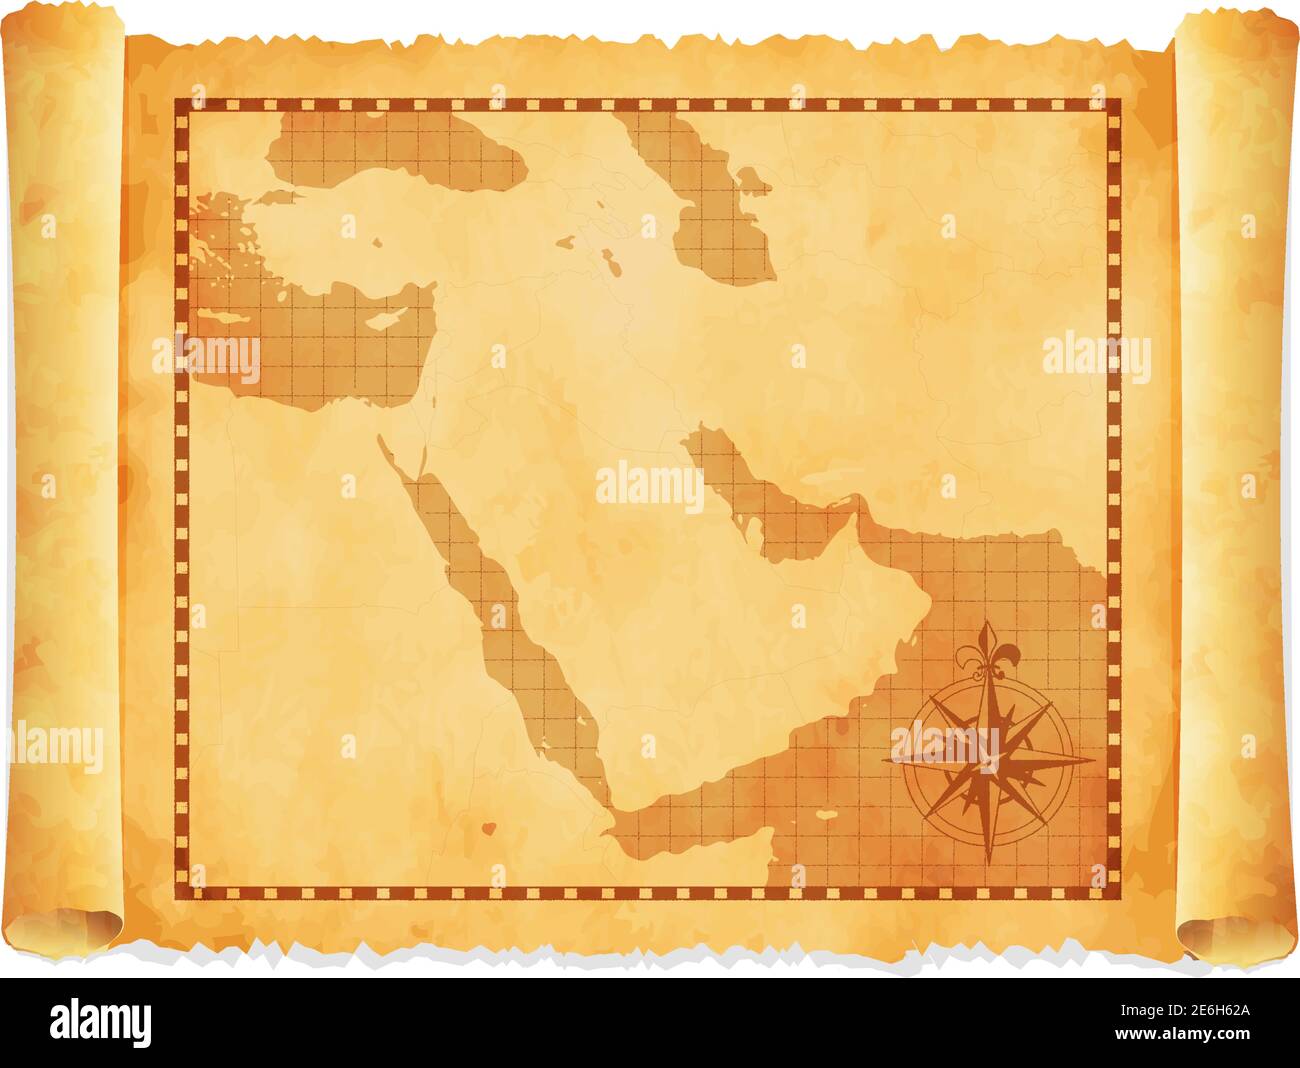 Alter Jahrgang mittlerer Osten (westasien) Kartenvektordarstellung Stock Vektor